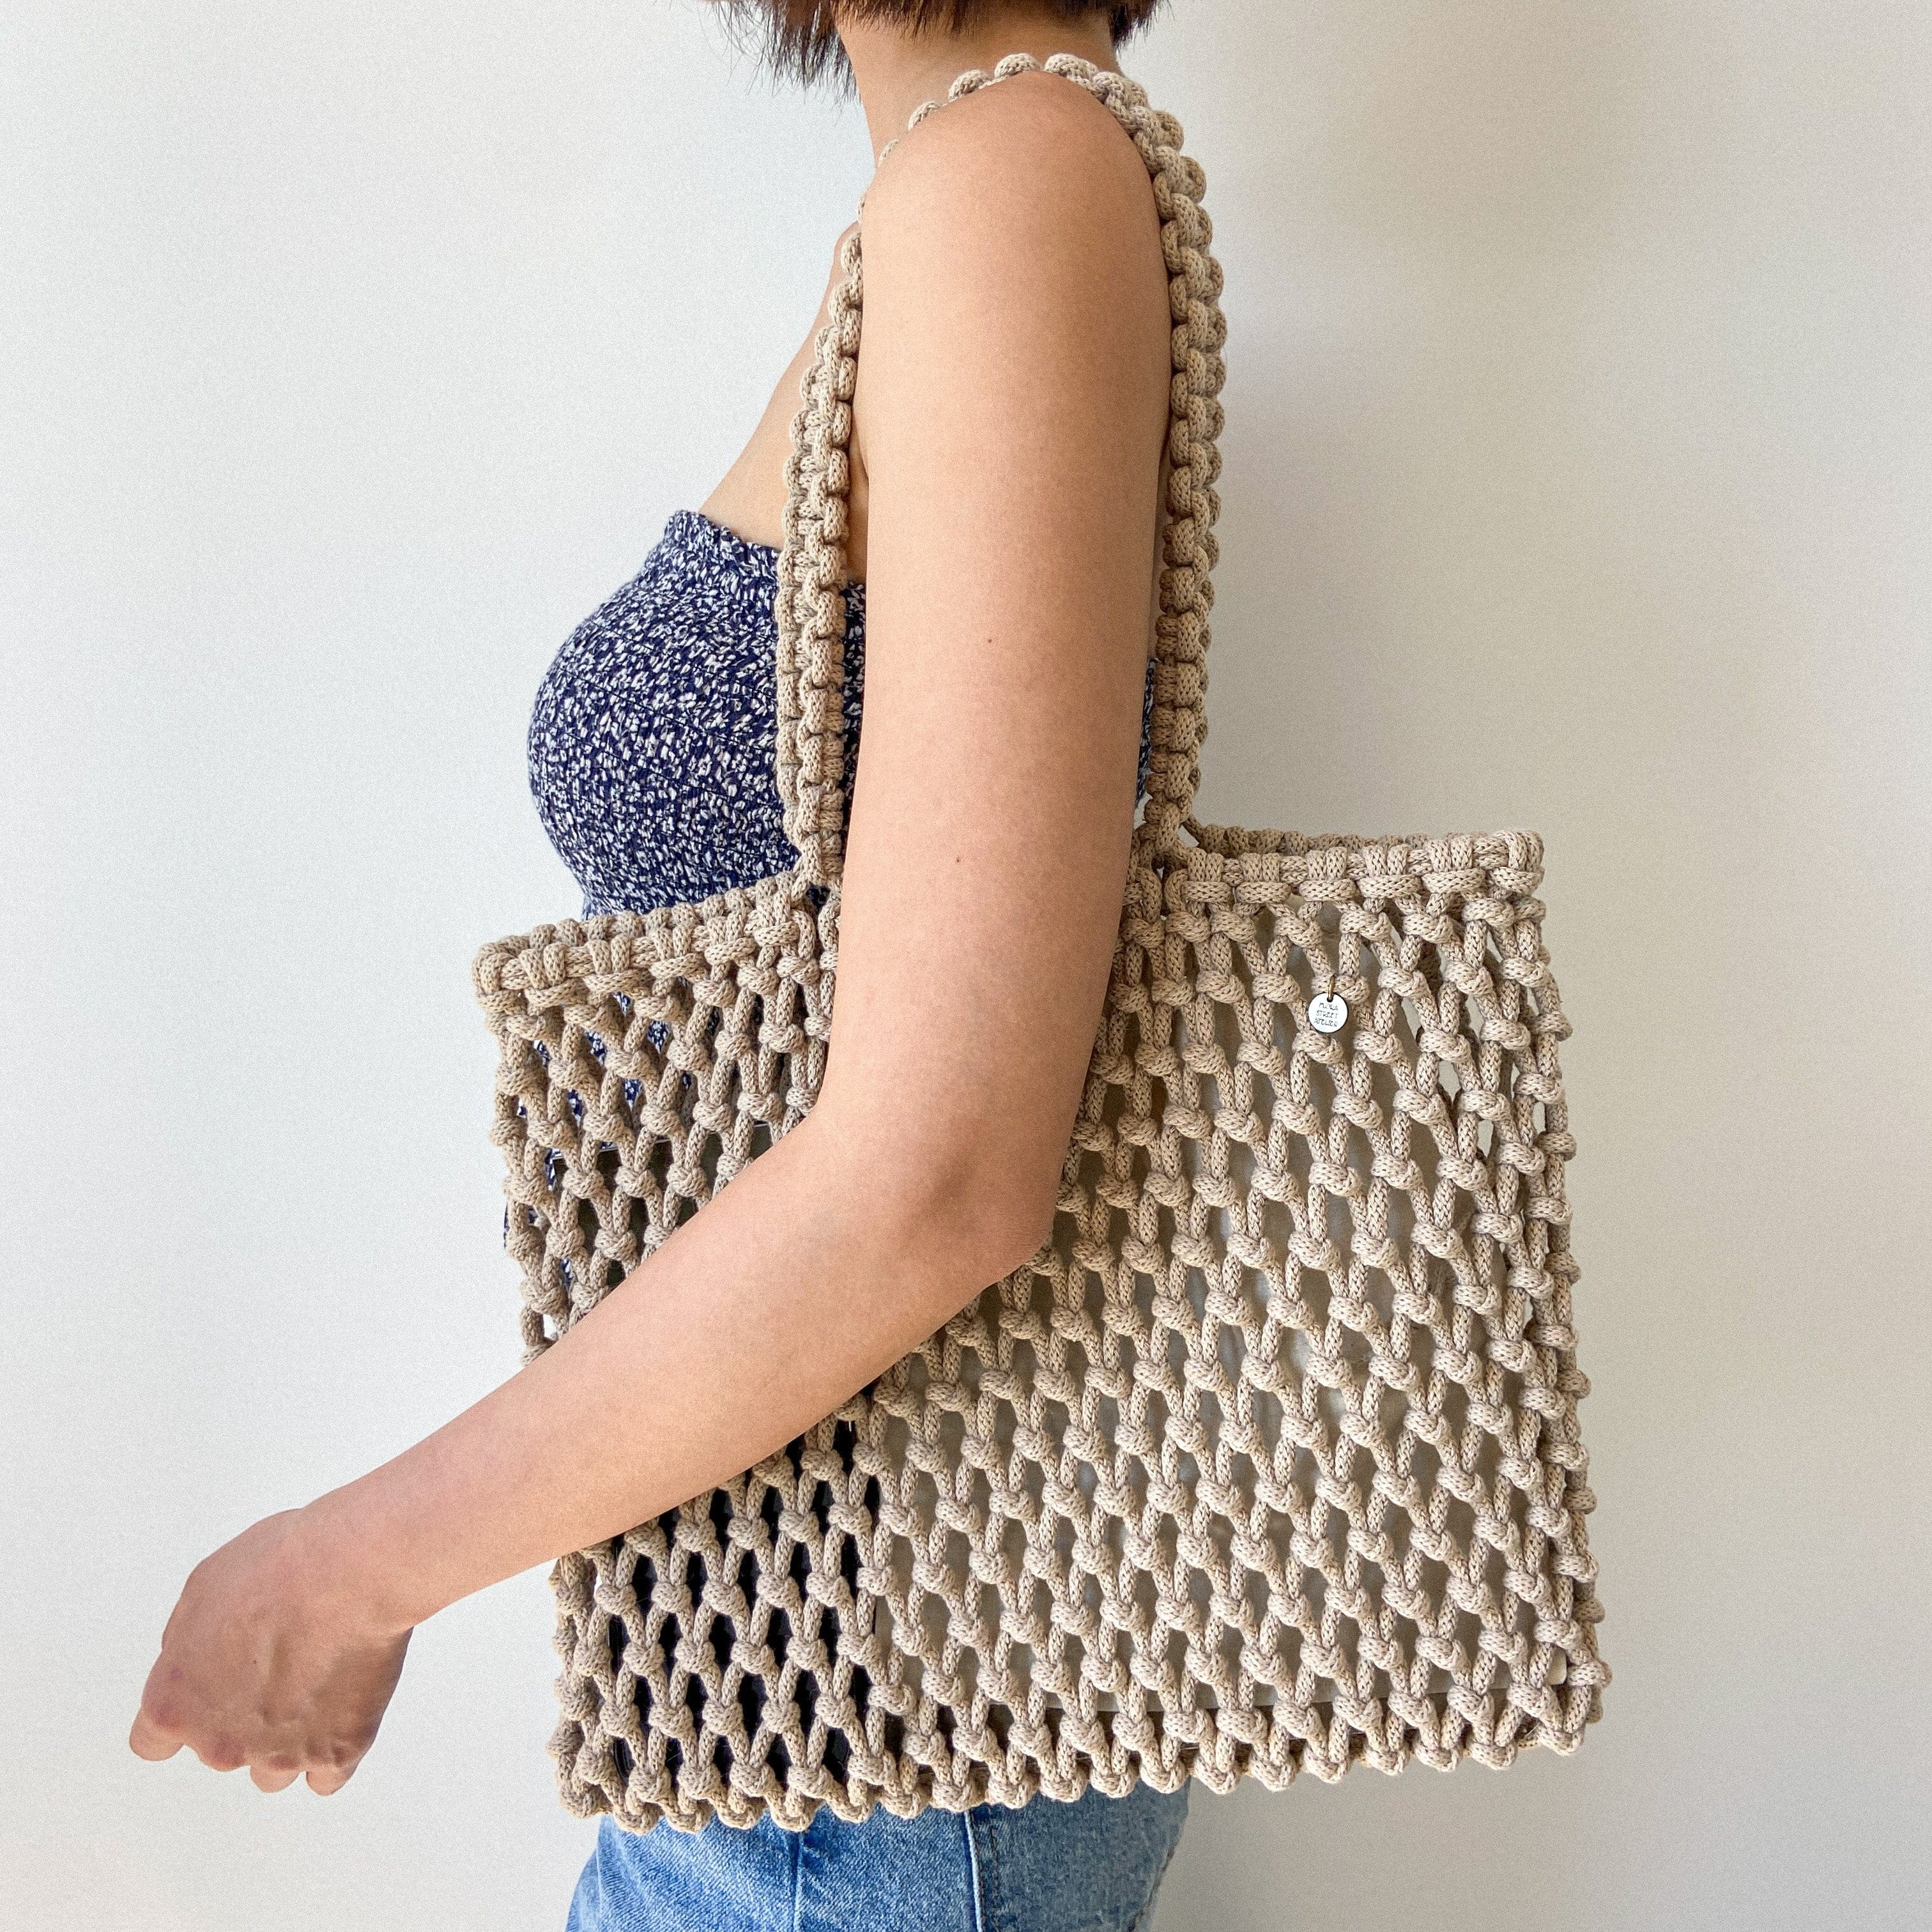 Macrame Bag Tutorial - DIY Macrame Wallet for Girls - YouTube